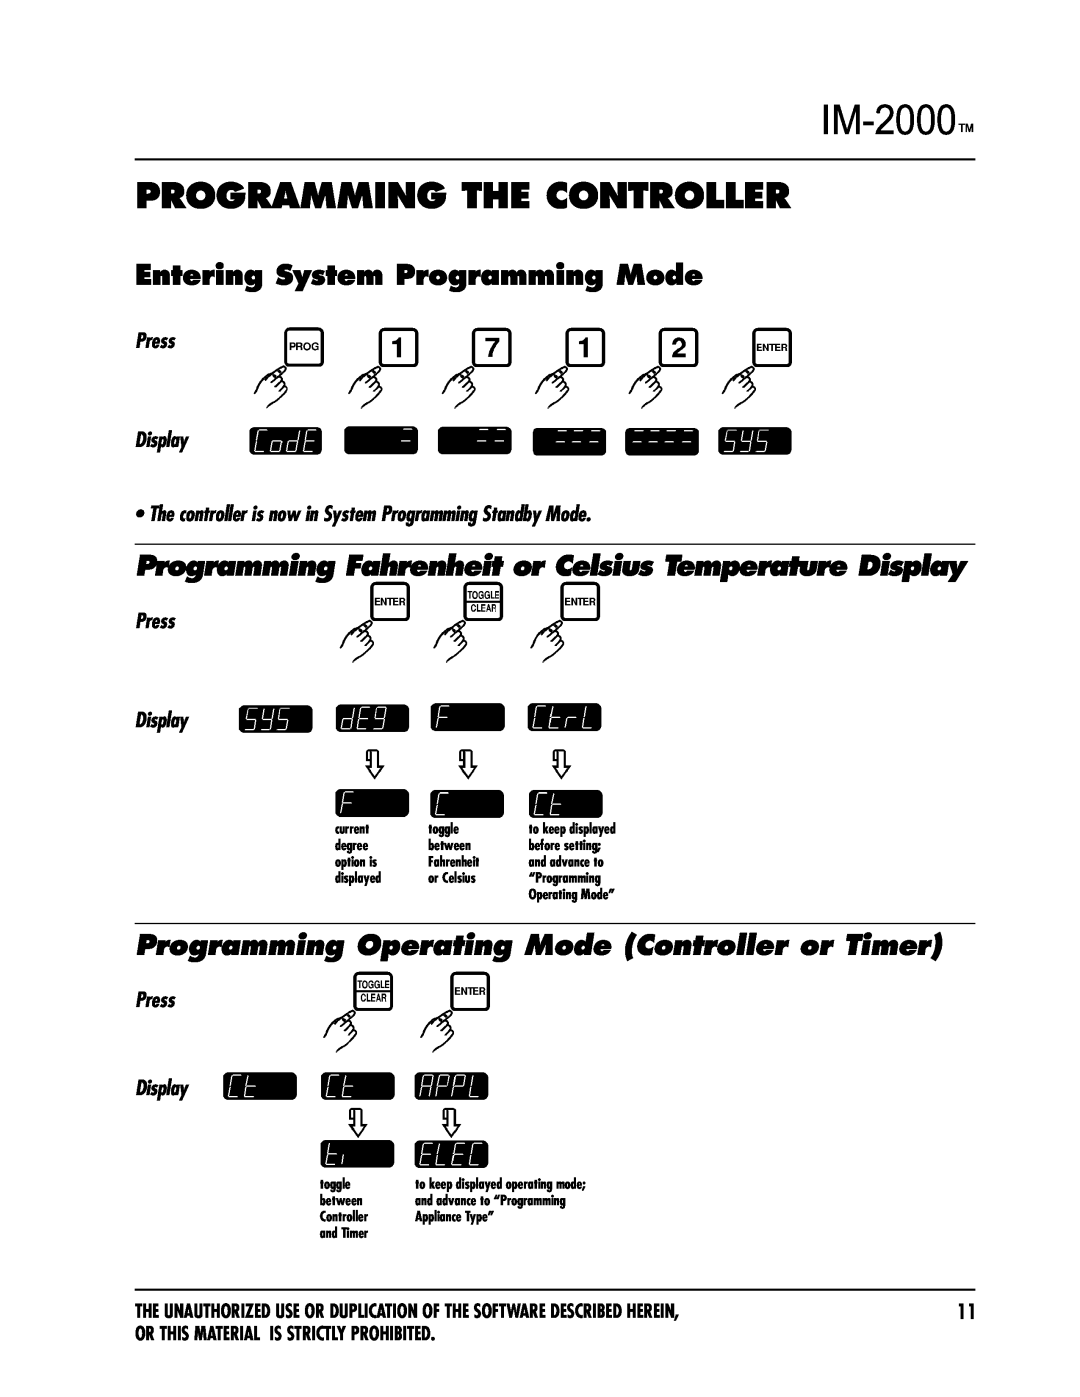 Keating Of Chicago IM-2000 Entering System Programming Mode, Programming Operating Mode Controller or Timer, Press Display 